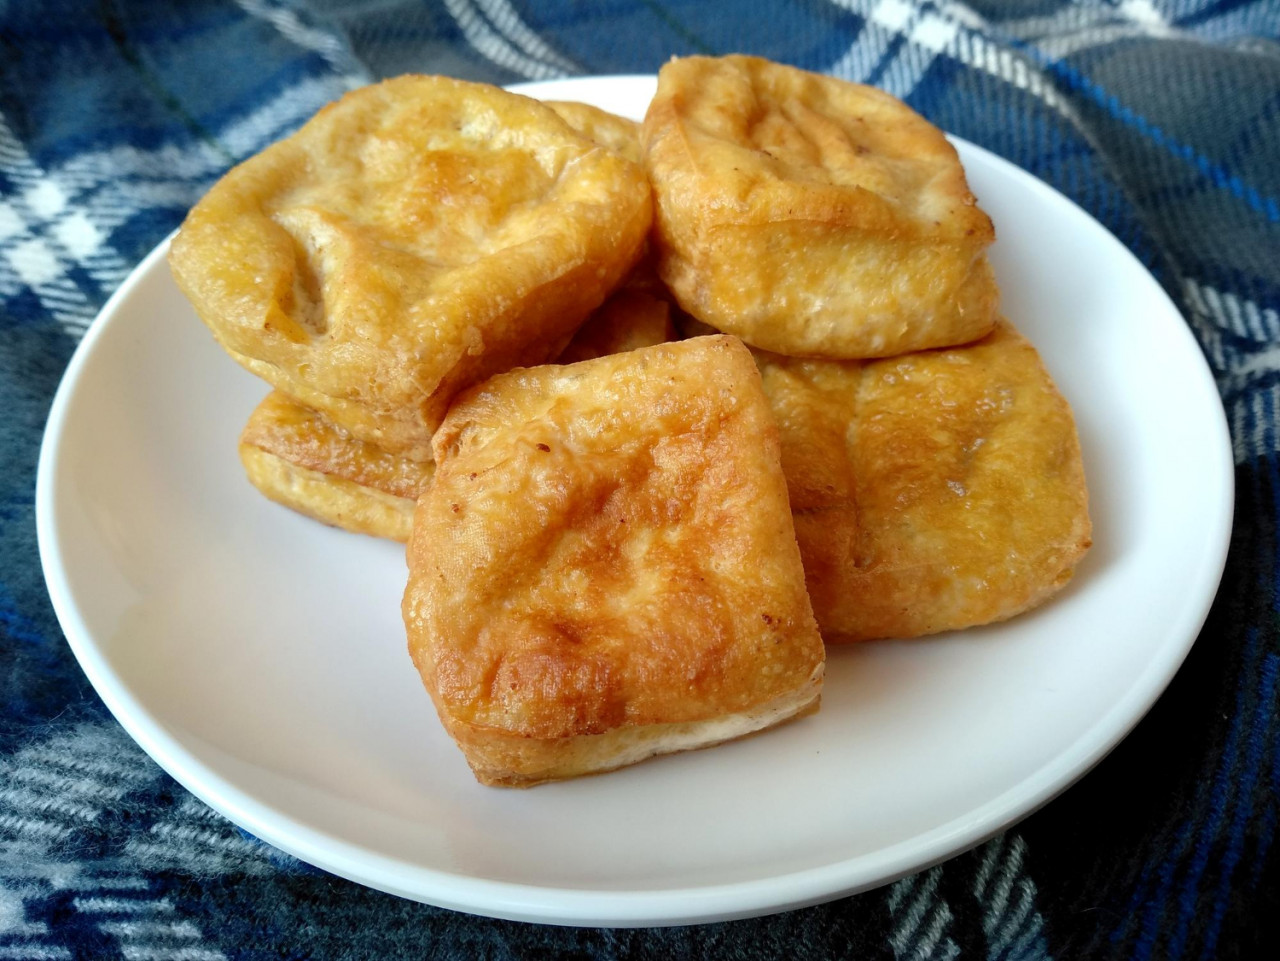 tahu goreng or fried tofu on a plate indonesian culinary food